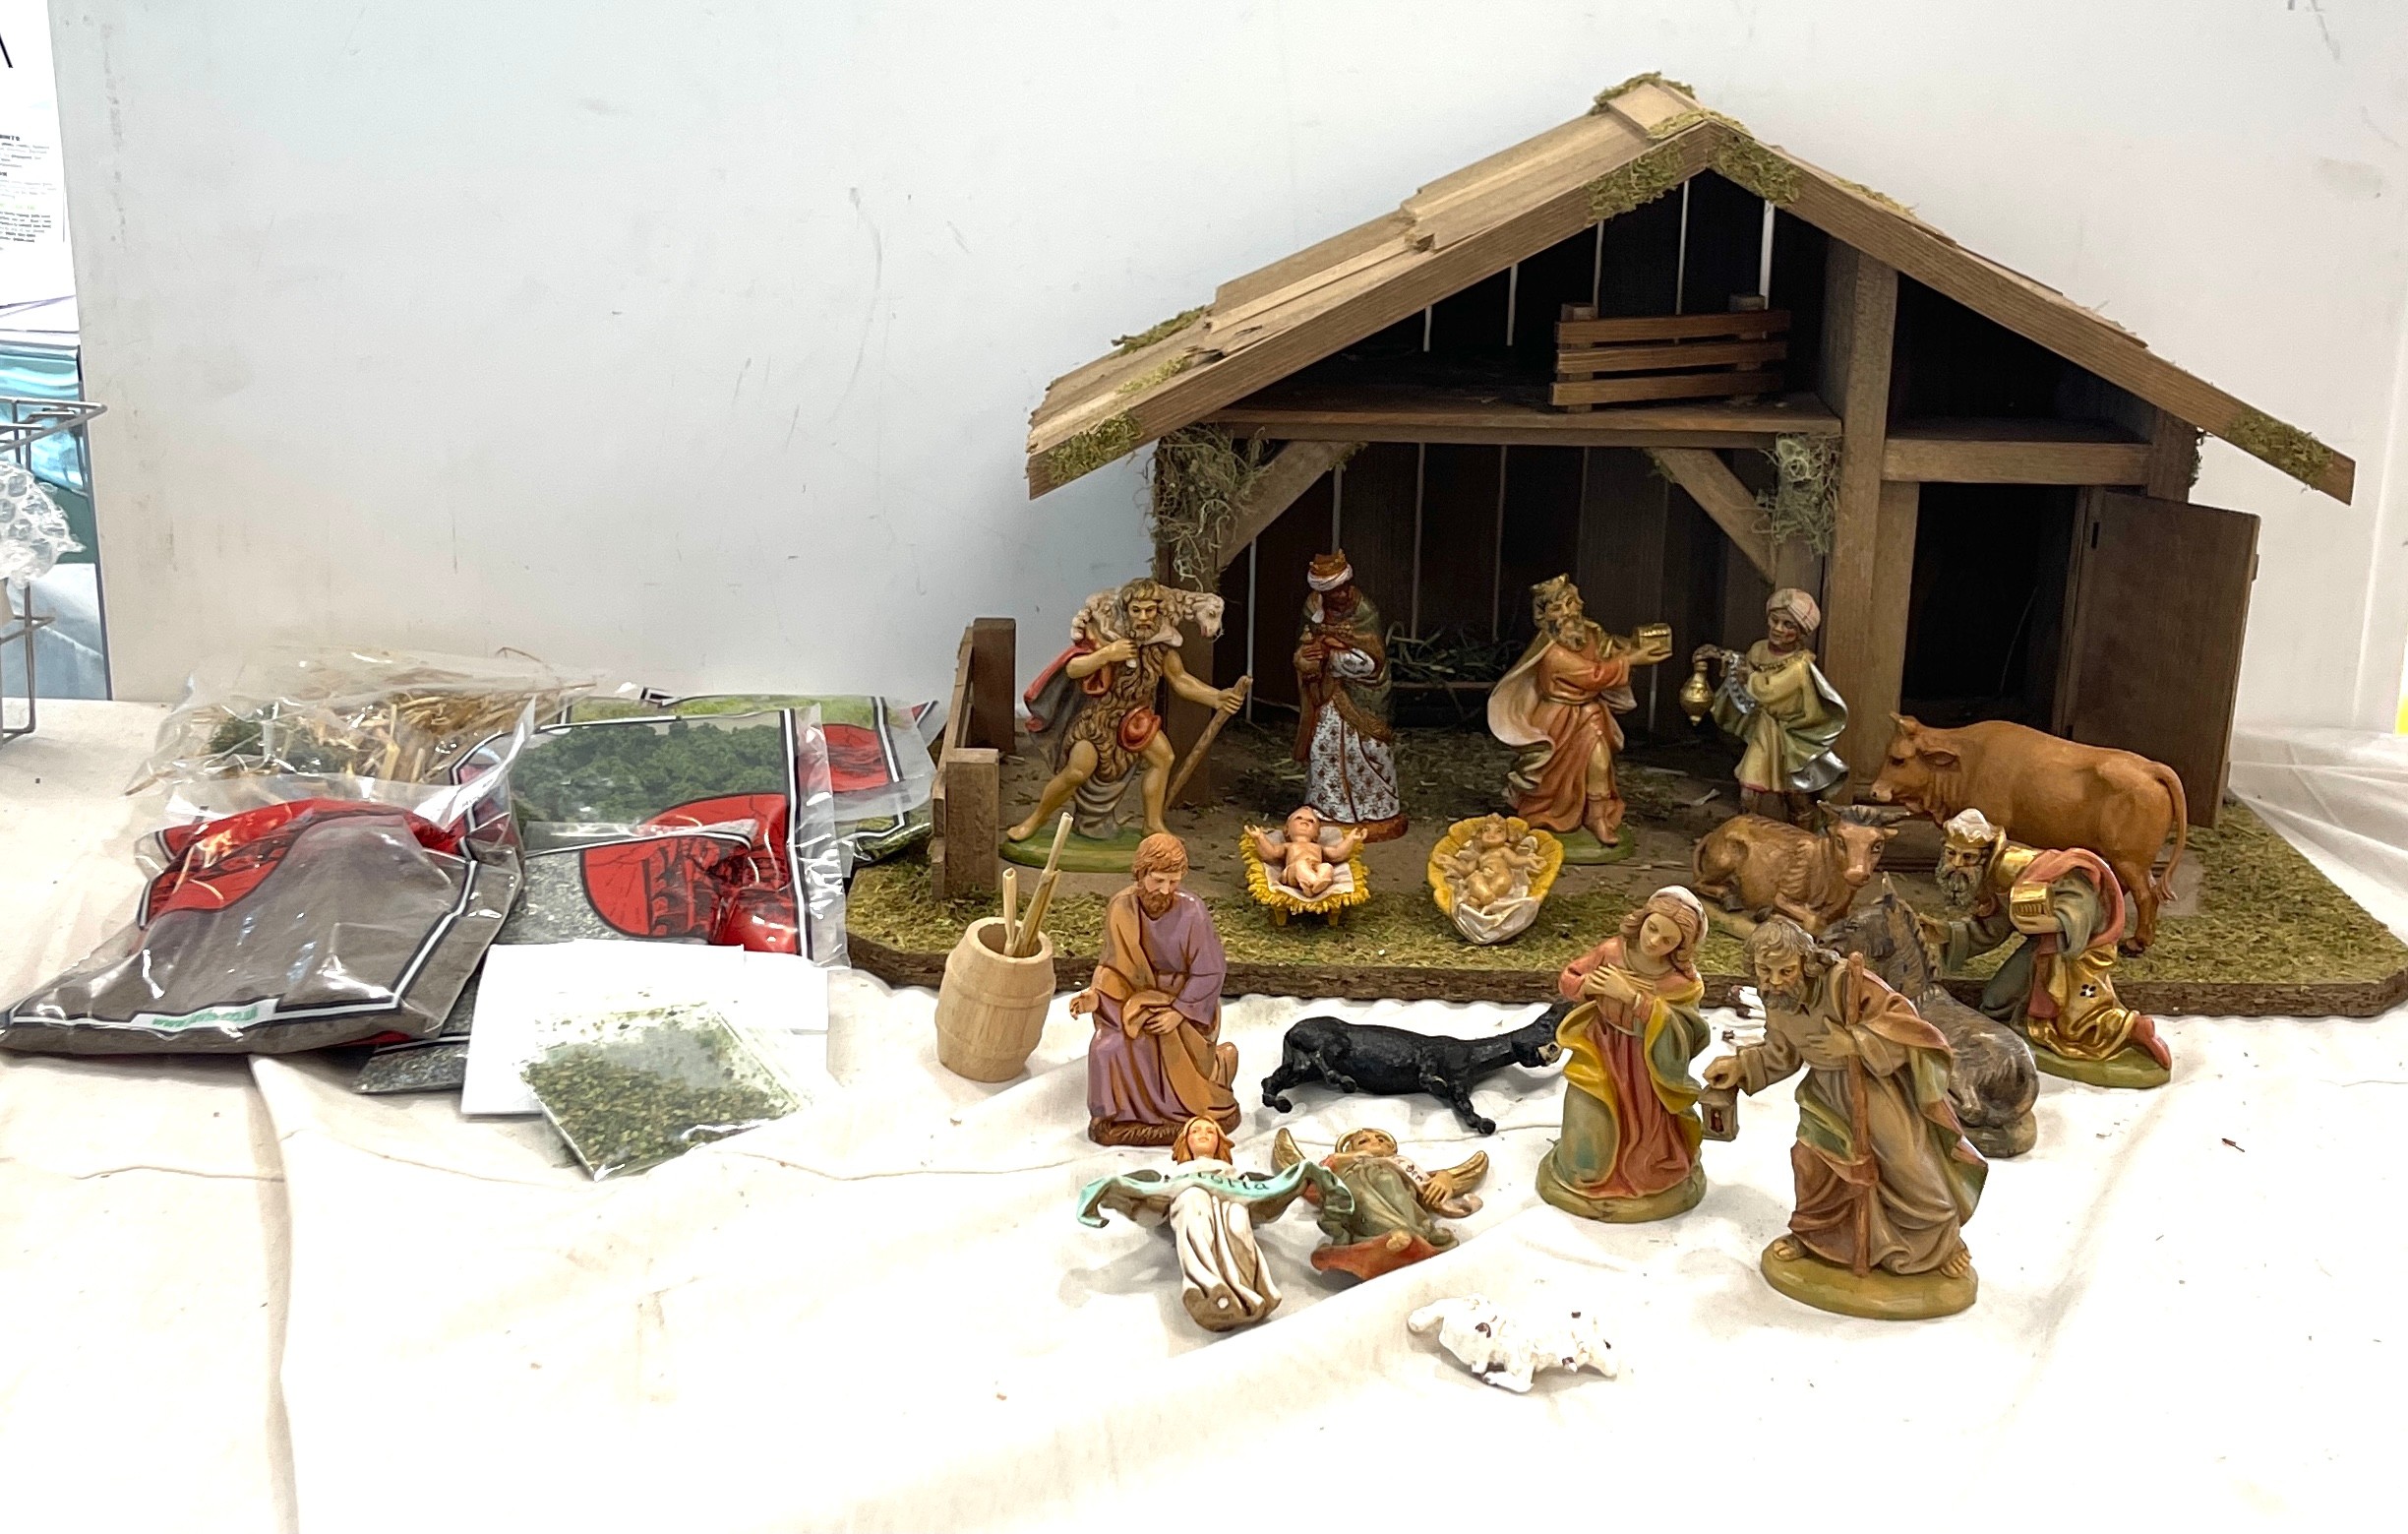 Handmade stable / manger with biblical figures, nativity scene figures by maker Landi Italy ,